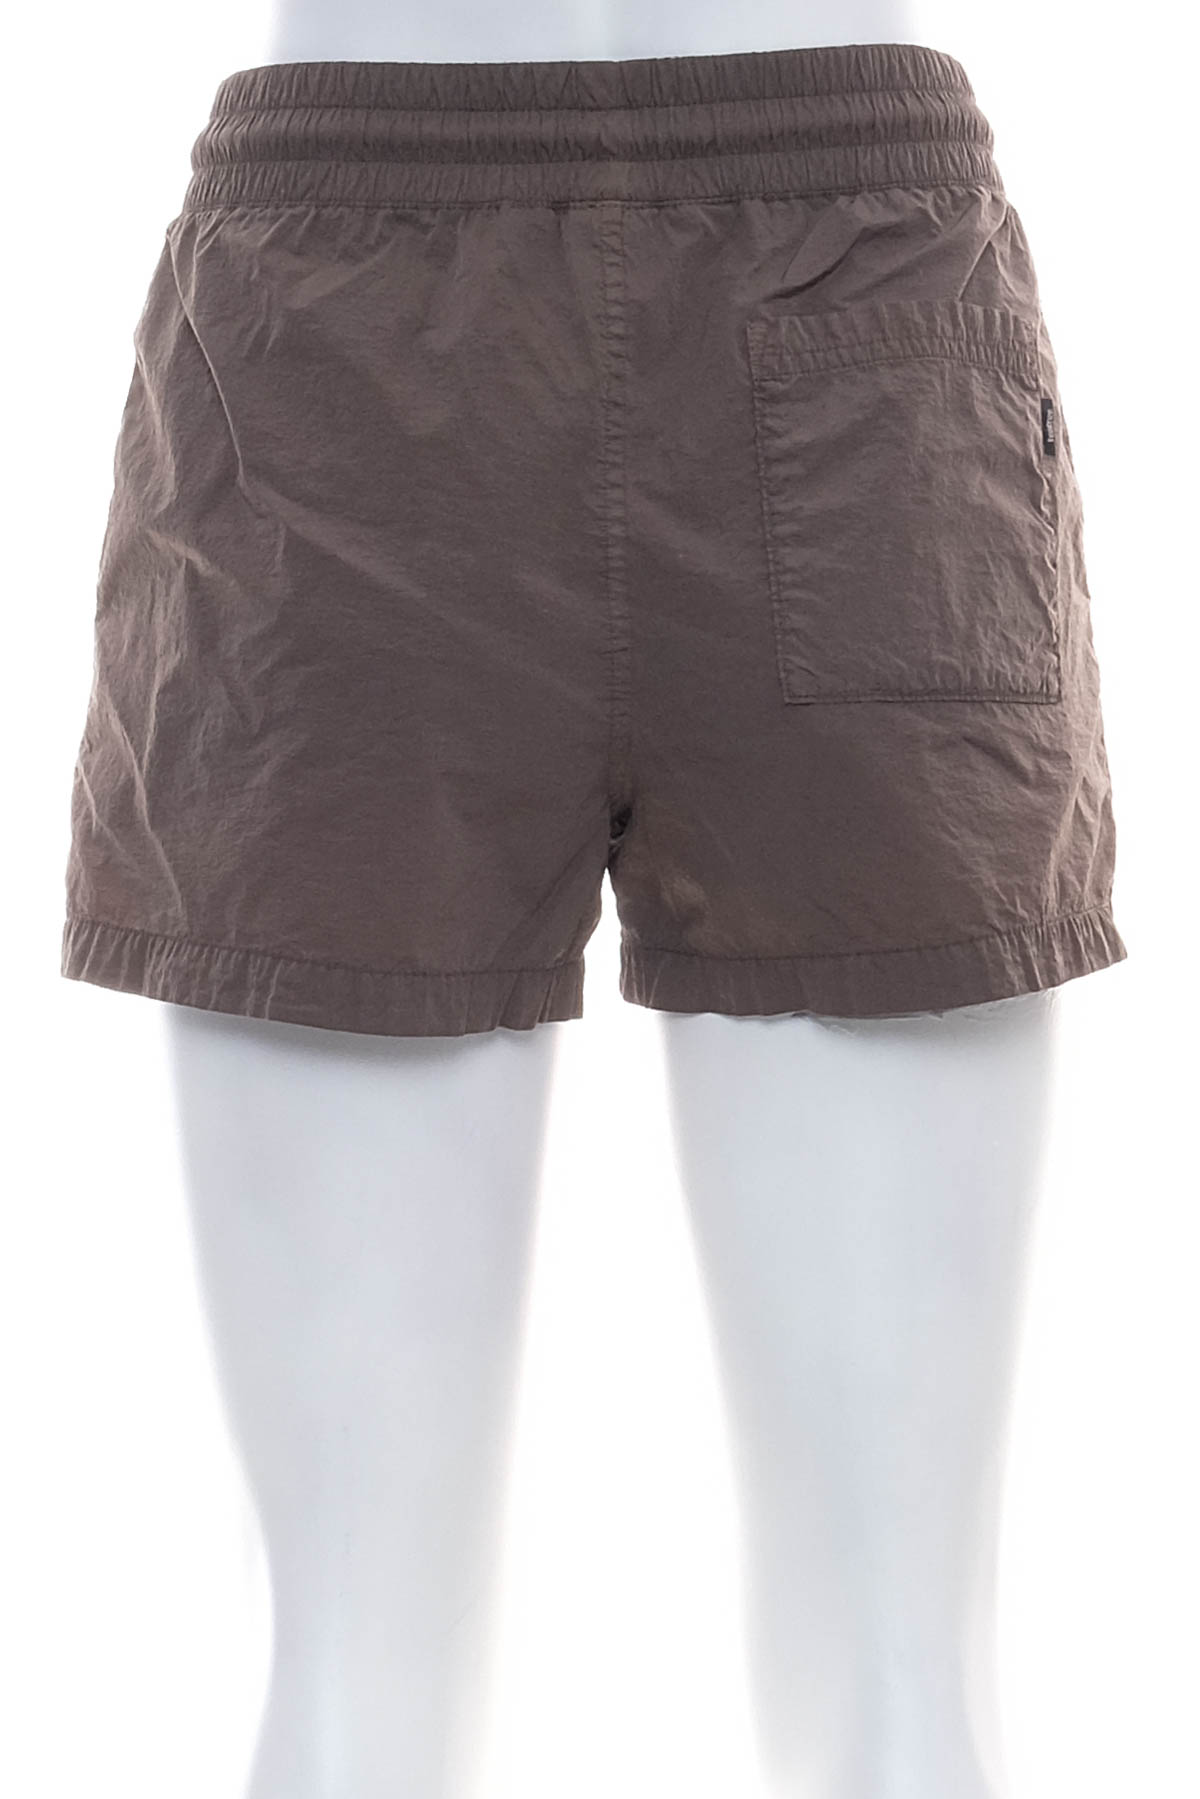 Women's shorts - Tentree - 1